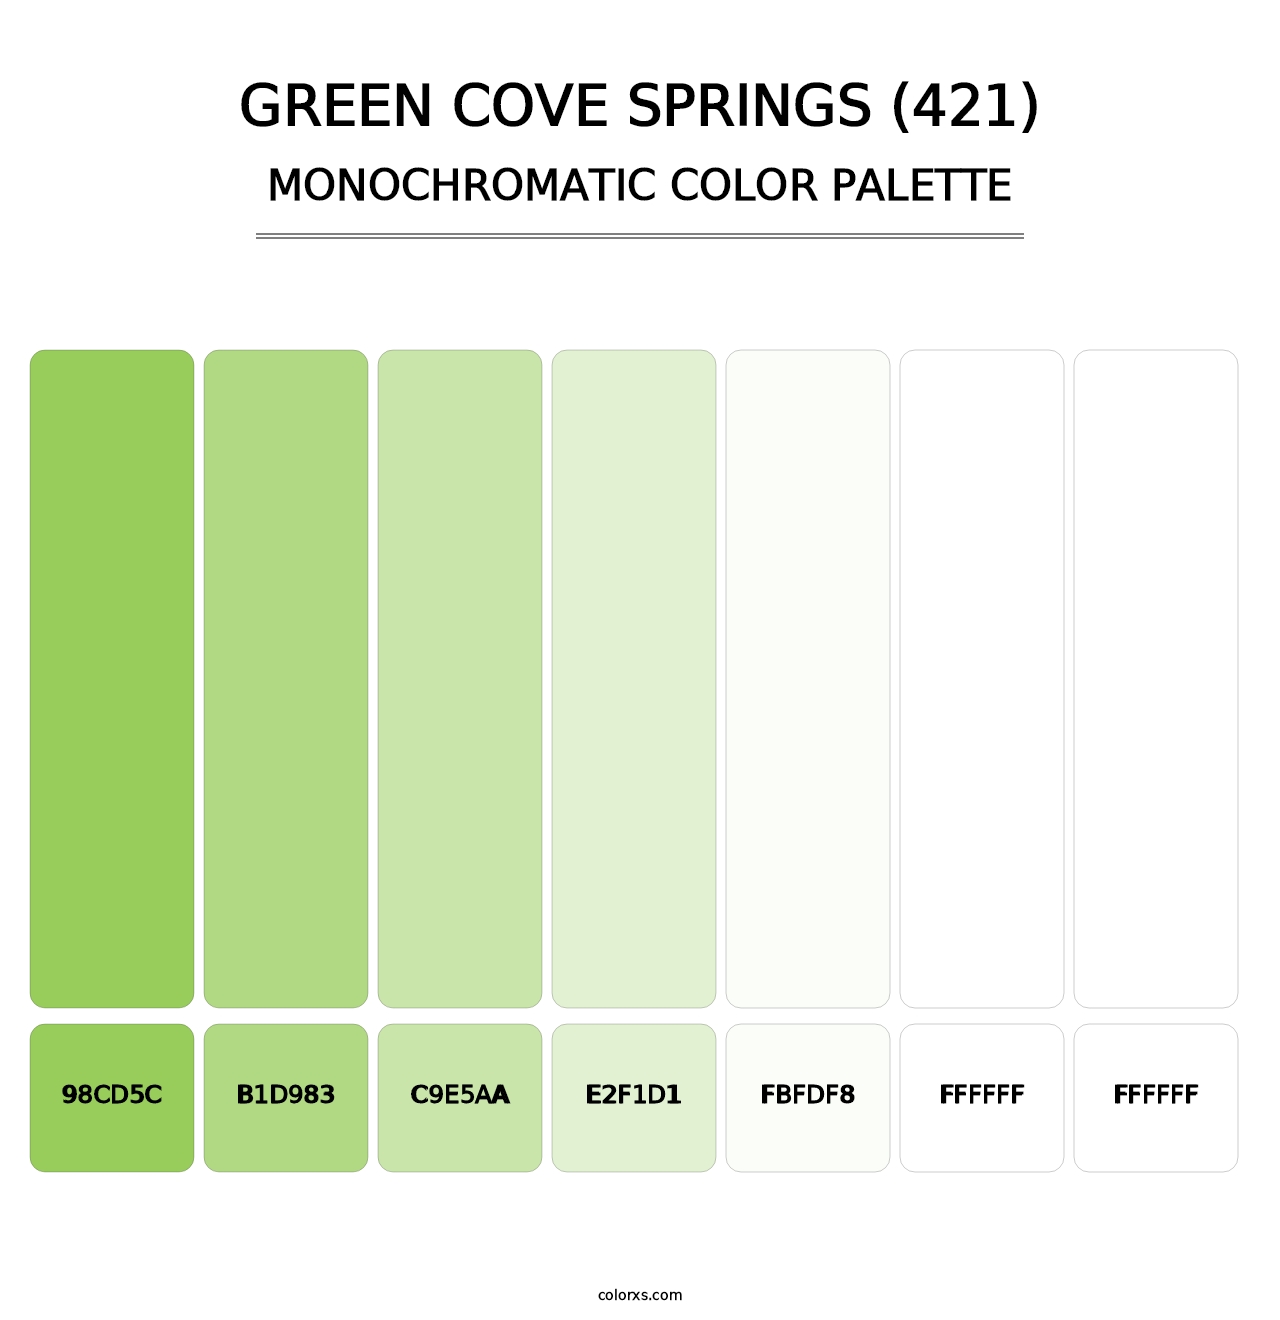 Green Cove Springs (421) - Monochromatic Color Palette